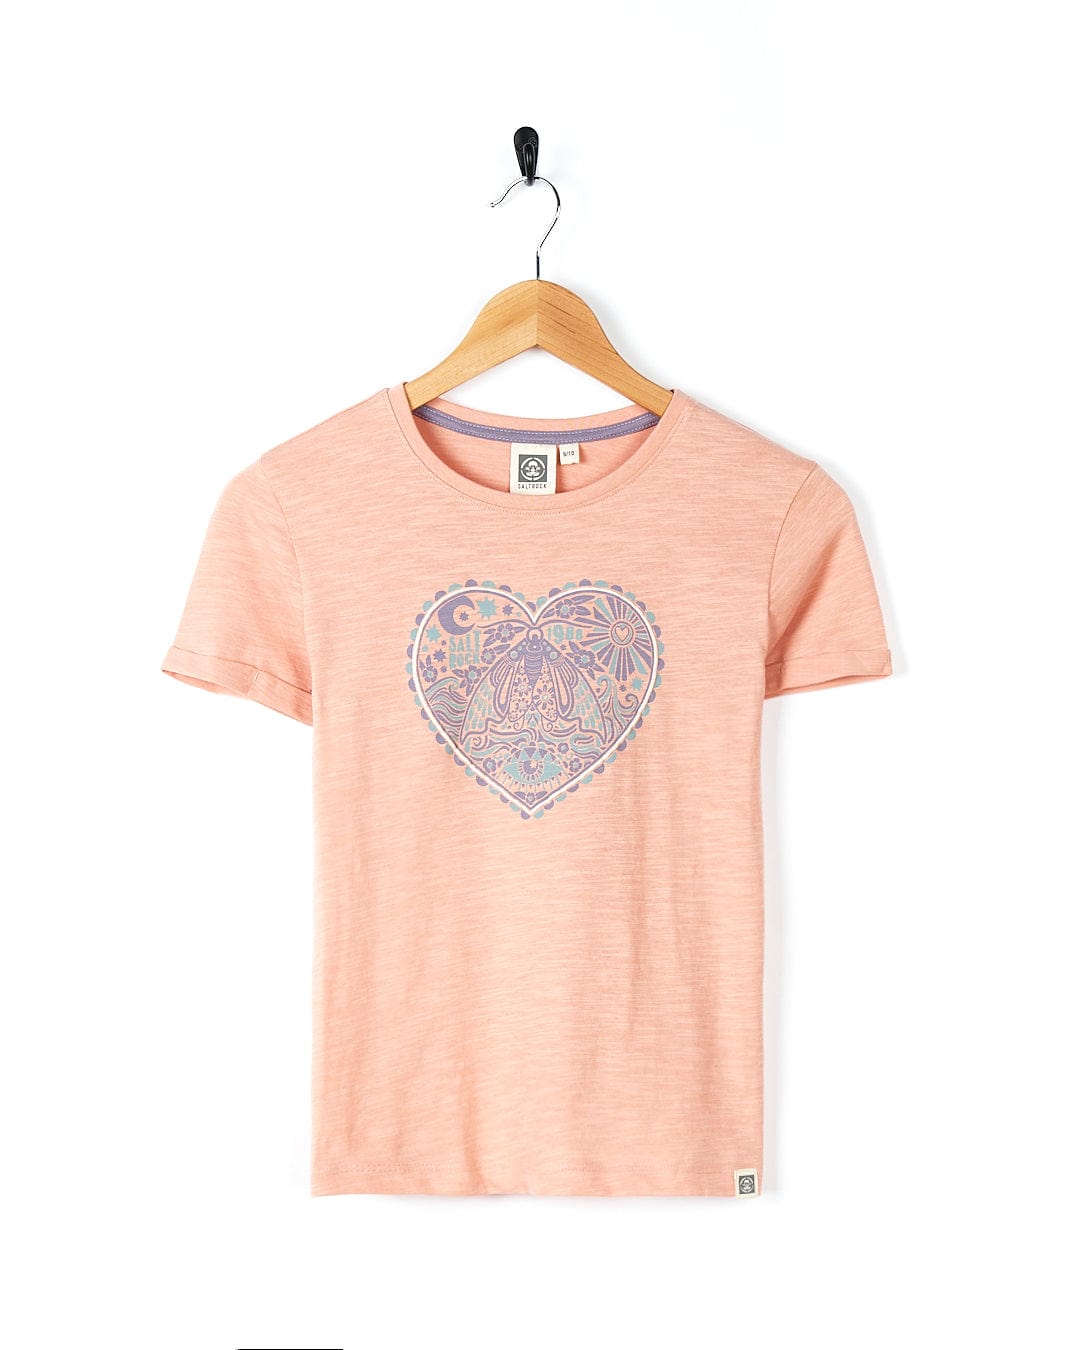 A Magic Moth - Kids Short Sleeve T-Shirt - Pink with a heart graphic. (Saltrock)